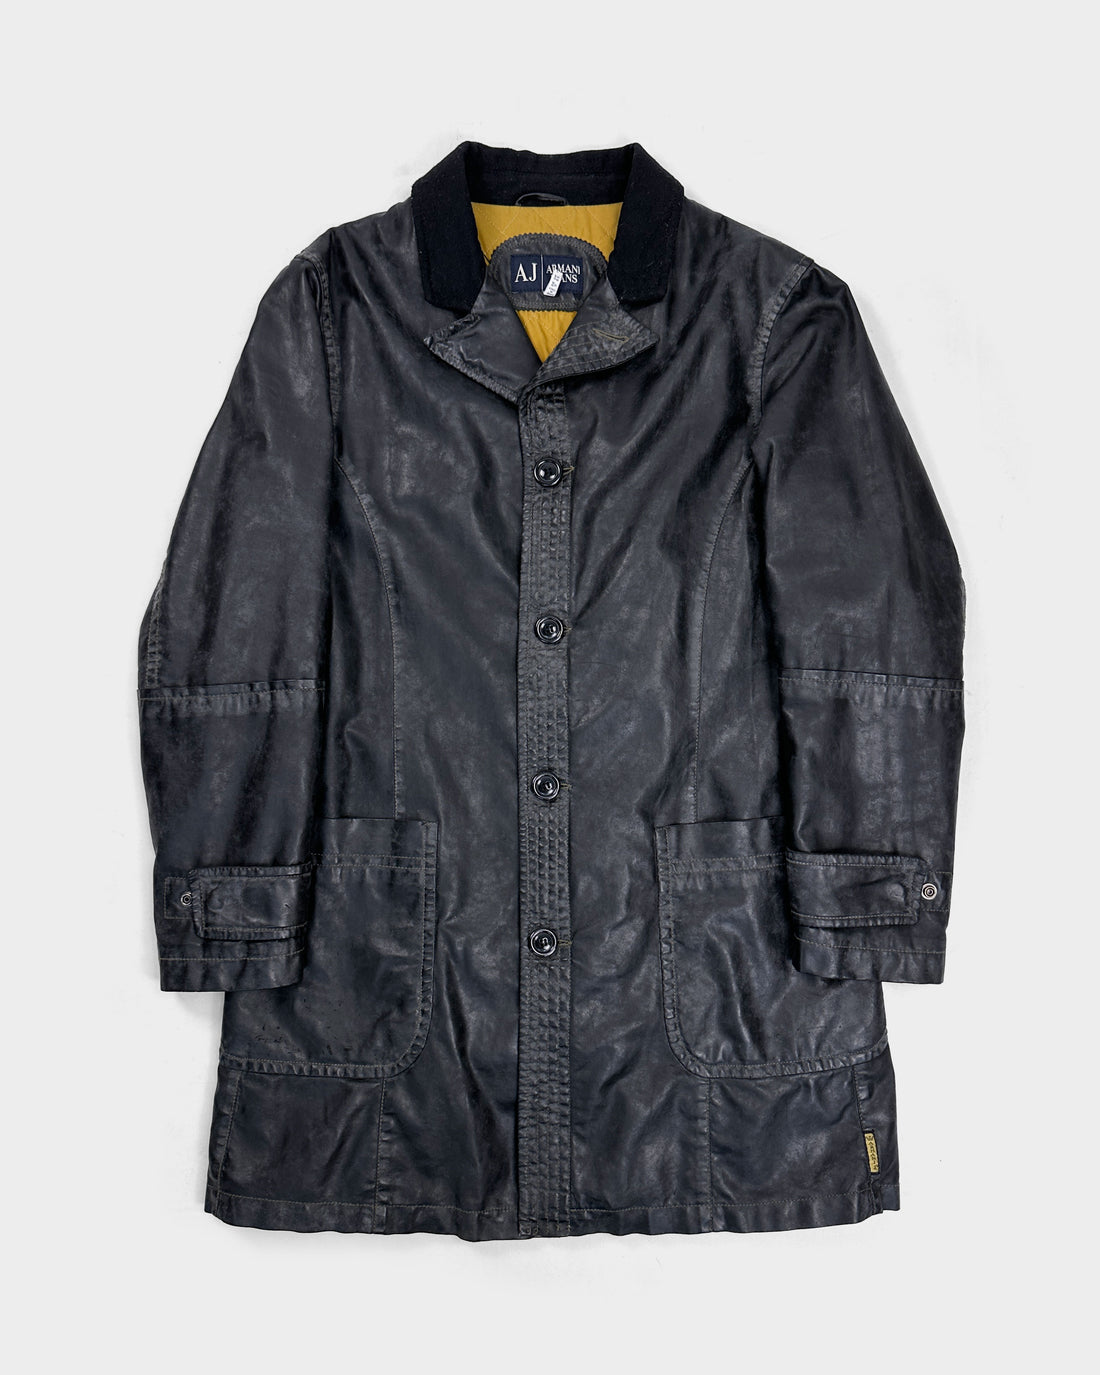 Armani Waxed Distressed Long Jacket 1990's